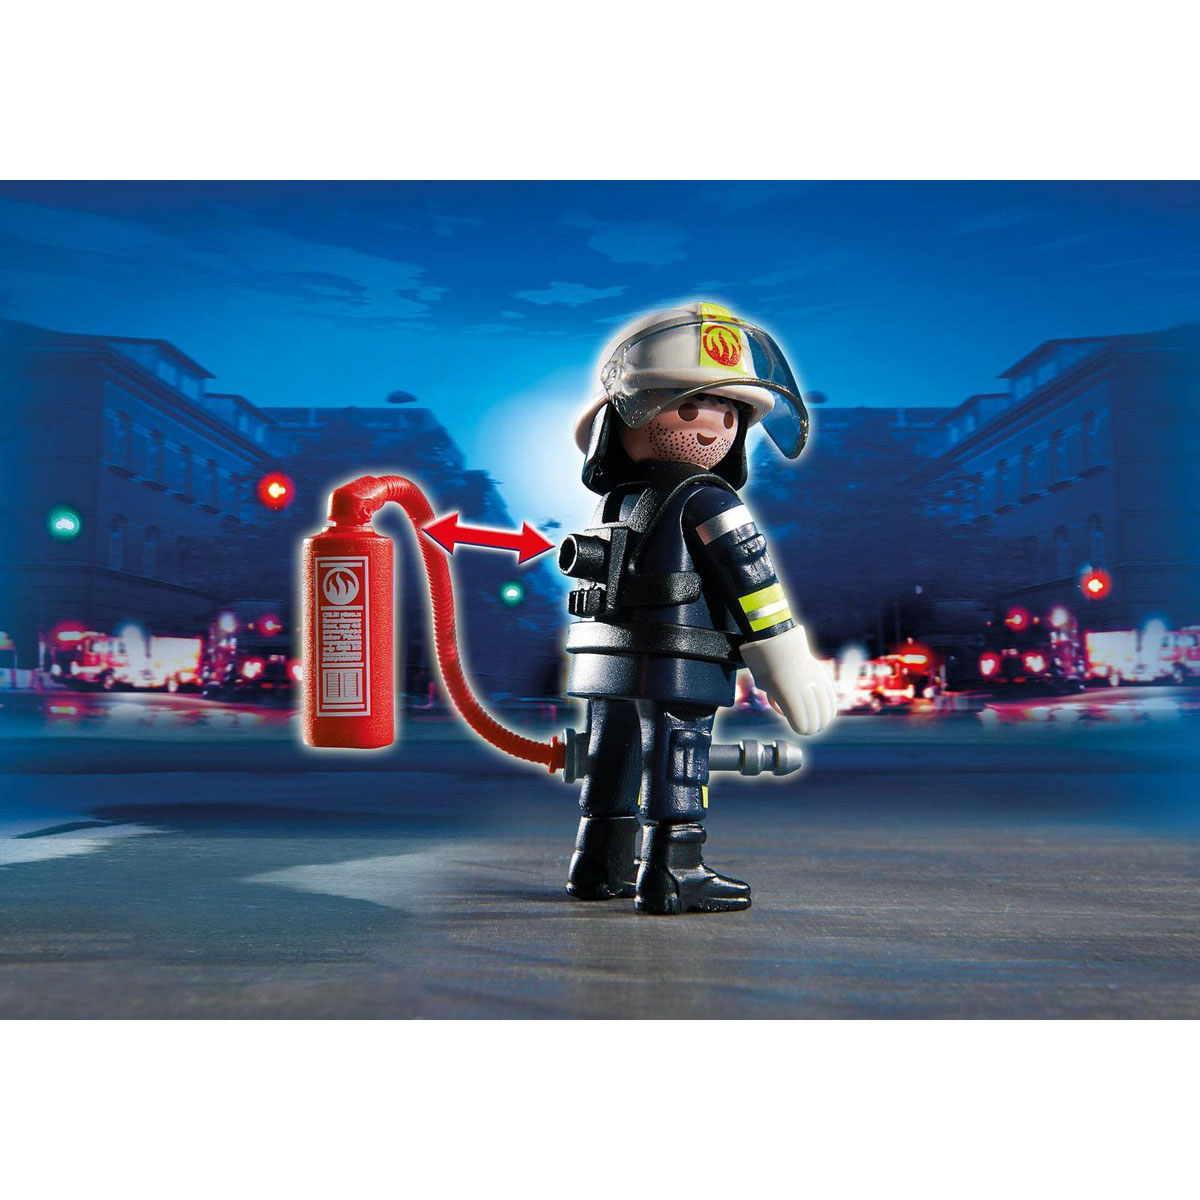 Playmobil Конструктор Команда пожарников 5366pm - фото 3